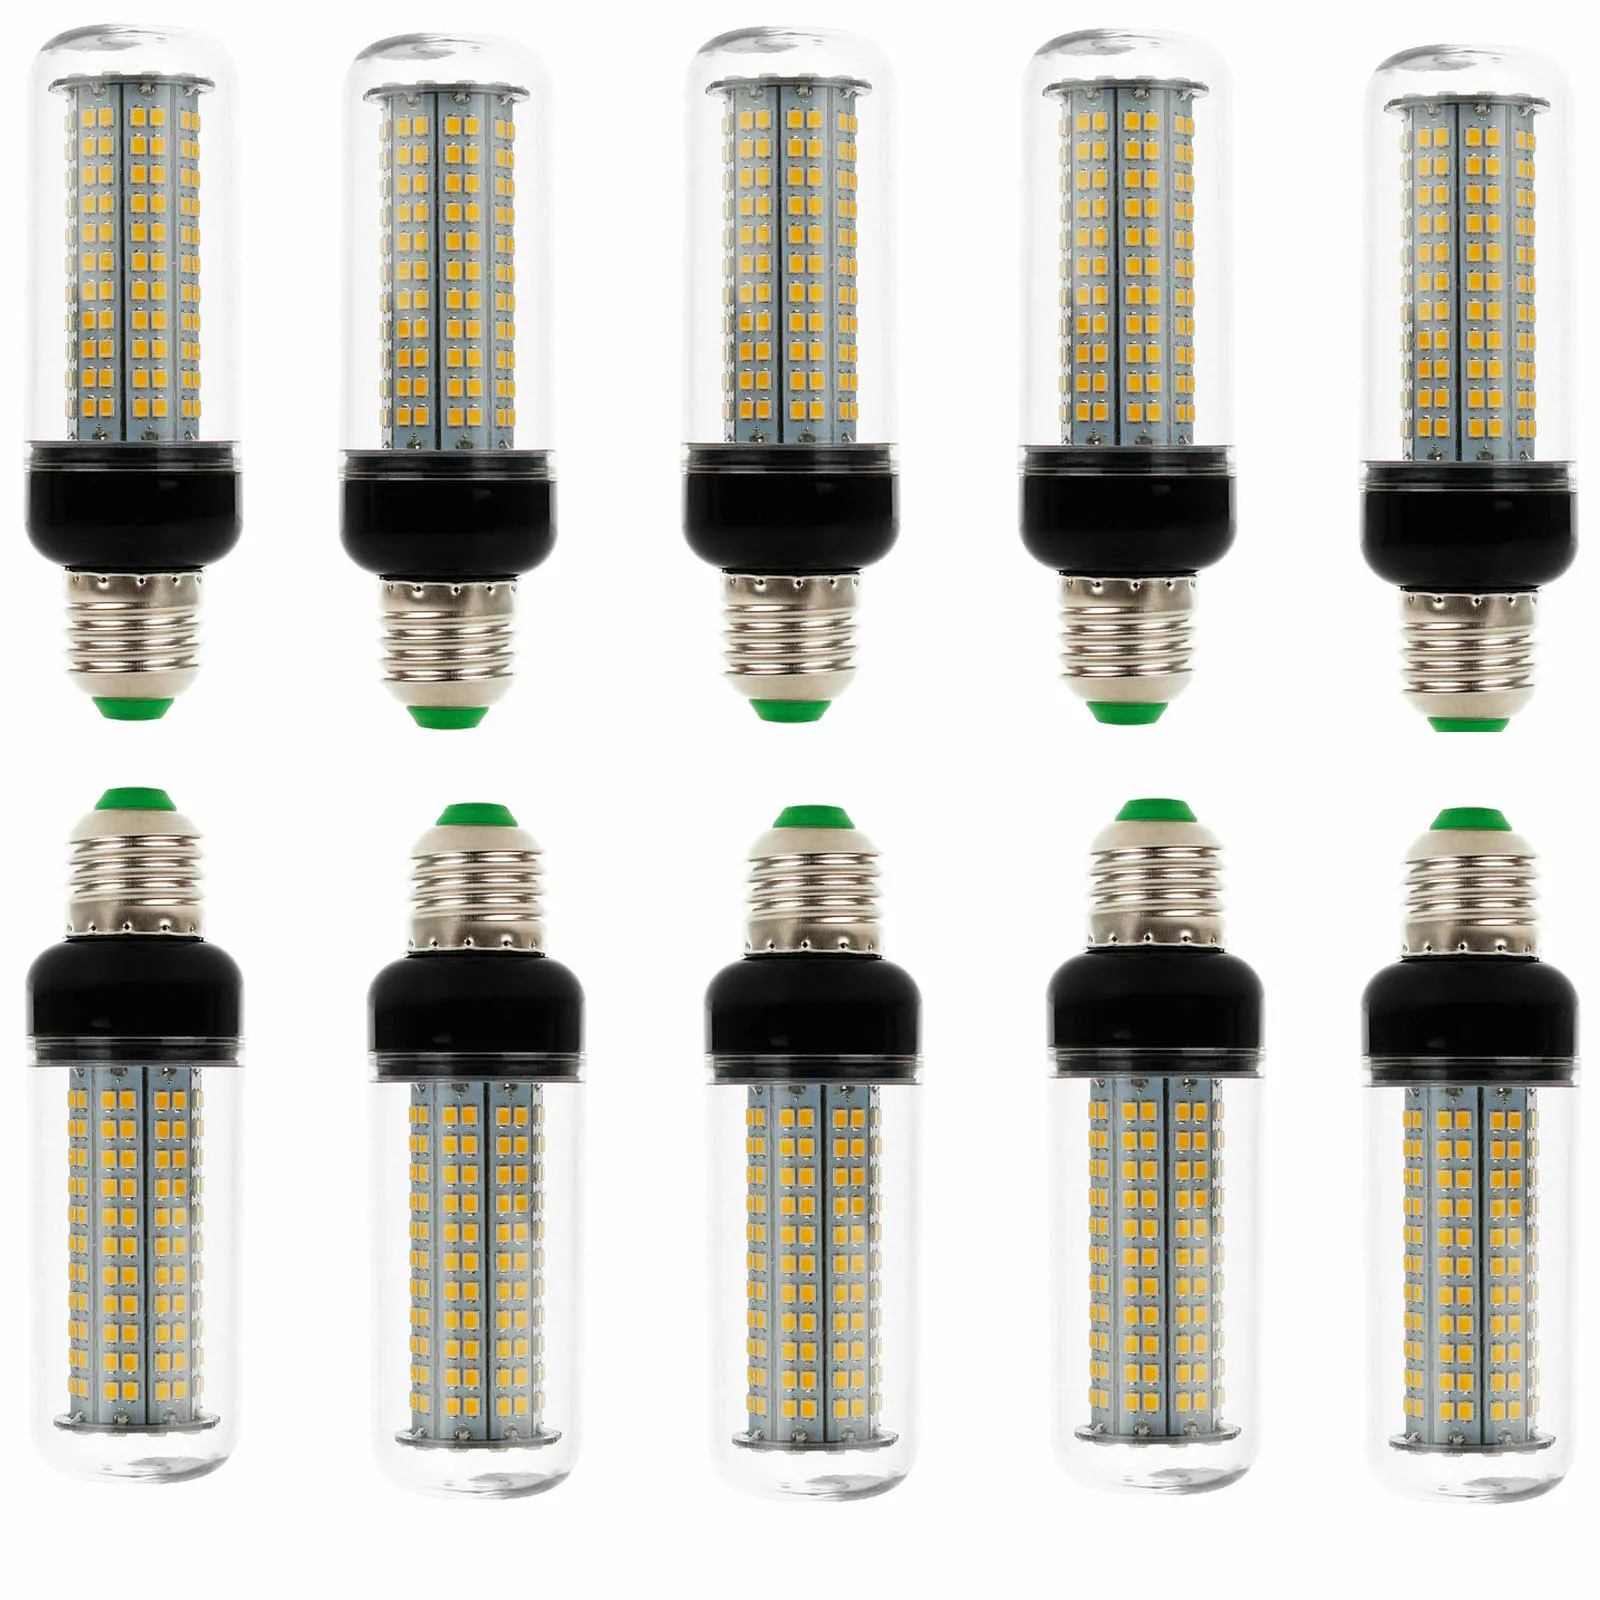 

10X LED Corn Bulb E26 E27 B22 E14 32W 2835 SMD Light Lamp 110V 220V 100W Halogen Lamps Equivalent For Home Decor Ampoule Lights